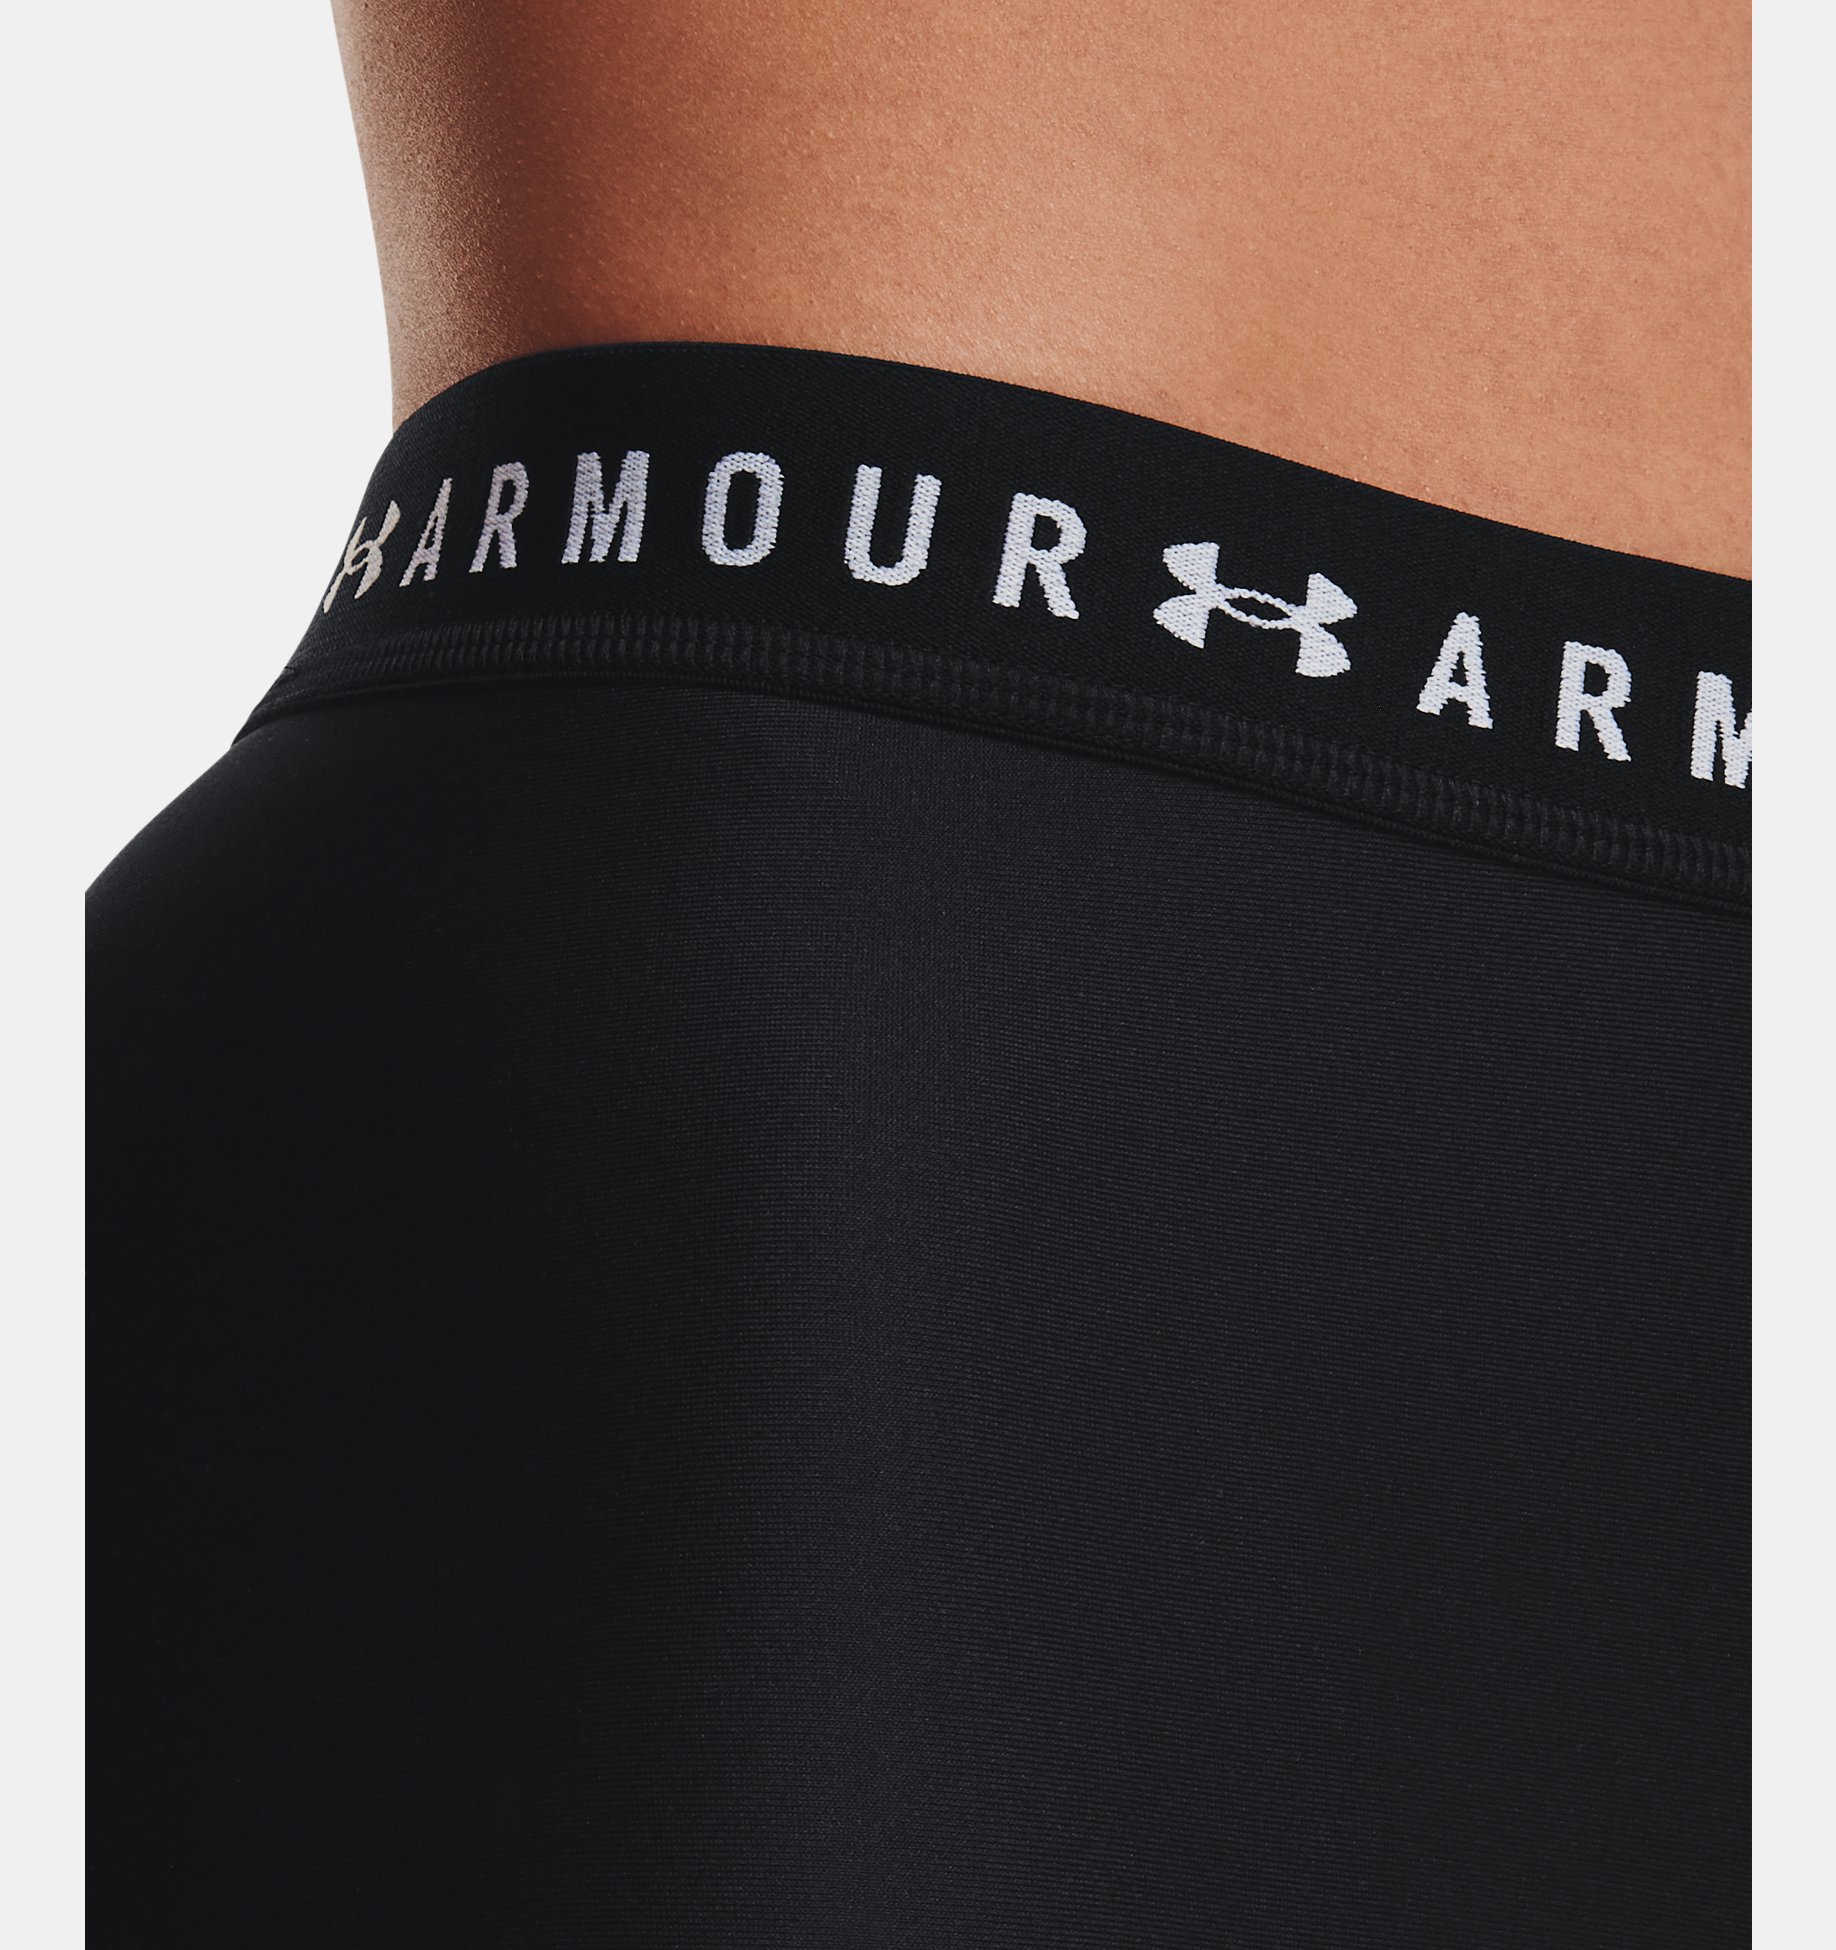 Women's HeatGear® Bike Shorts | Under Armour